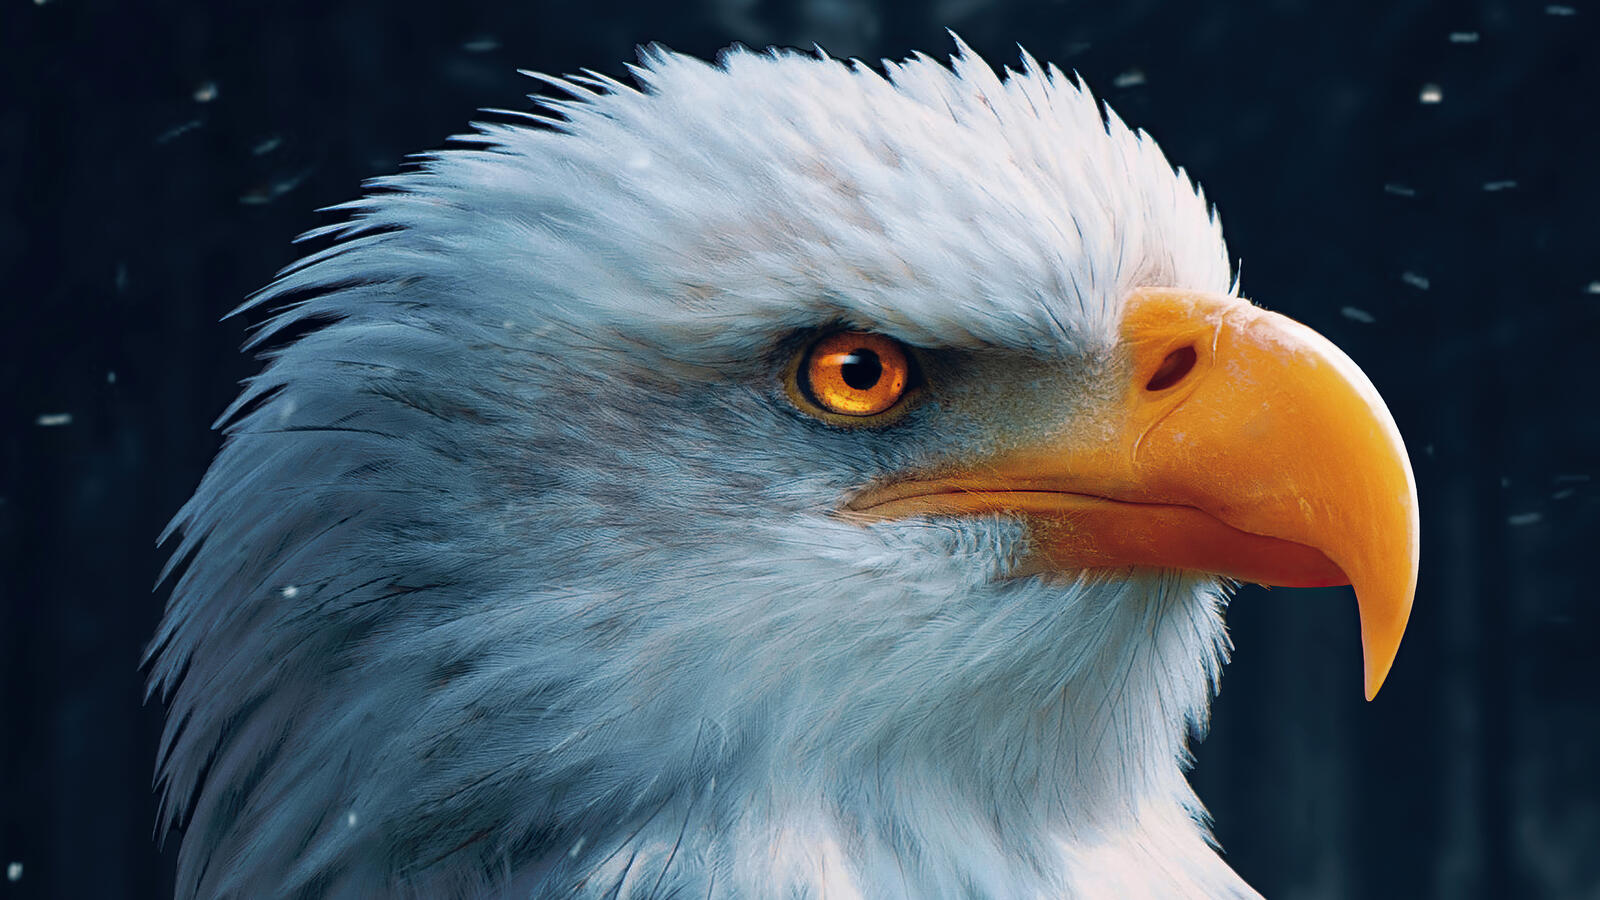 Wallpapers bald eagle eagle birds on the desktop